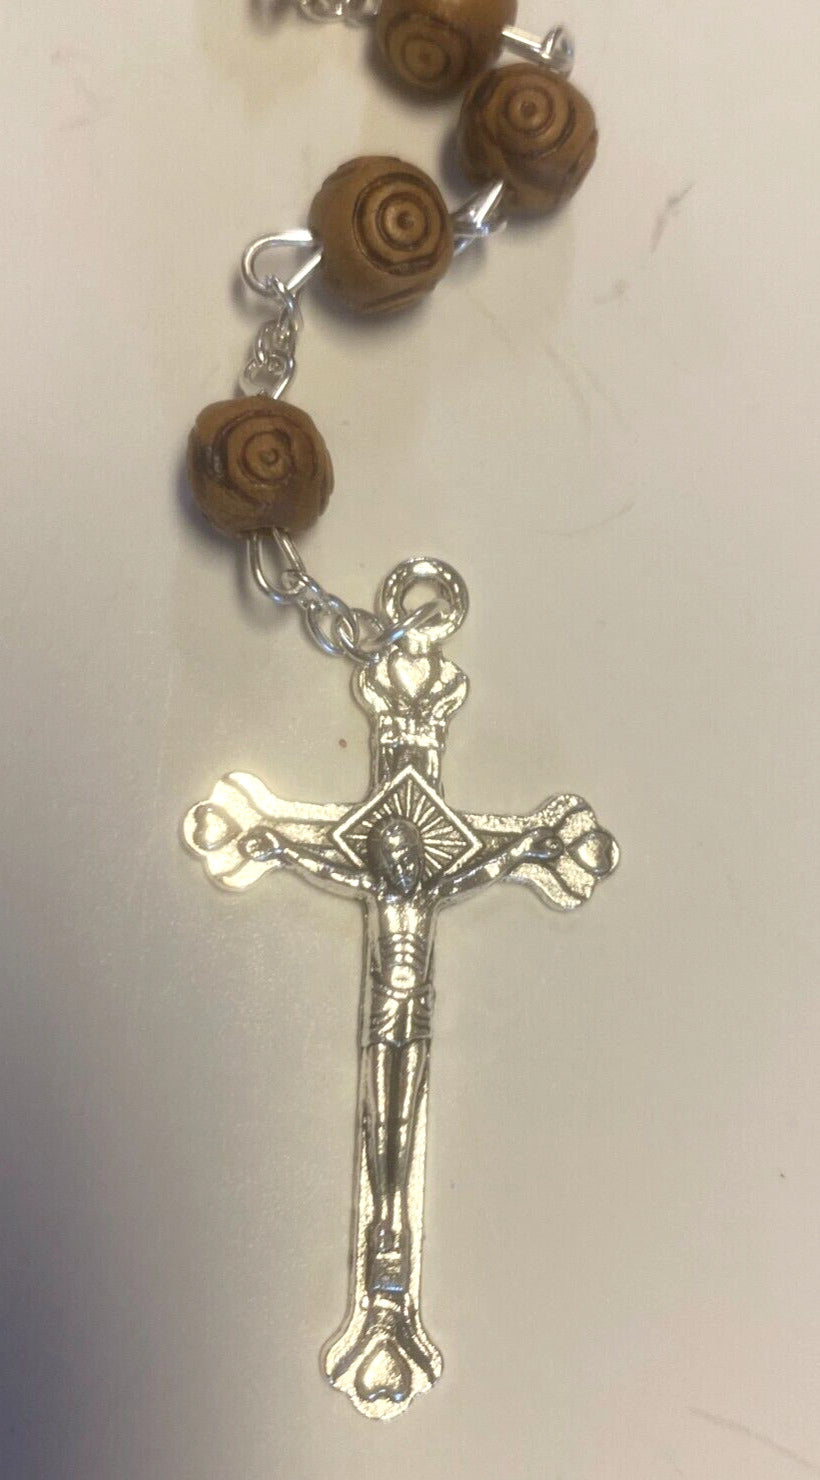 Olive Wood Medium Bead Rosary,New from Jerusalem #2 - Bob and Penny Lord